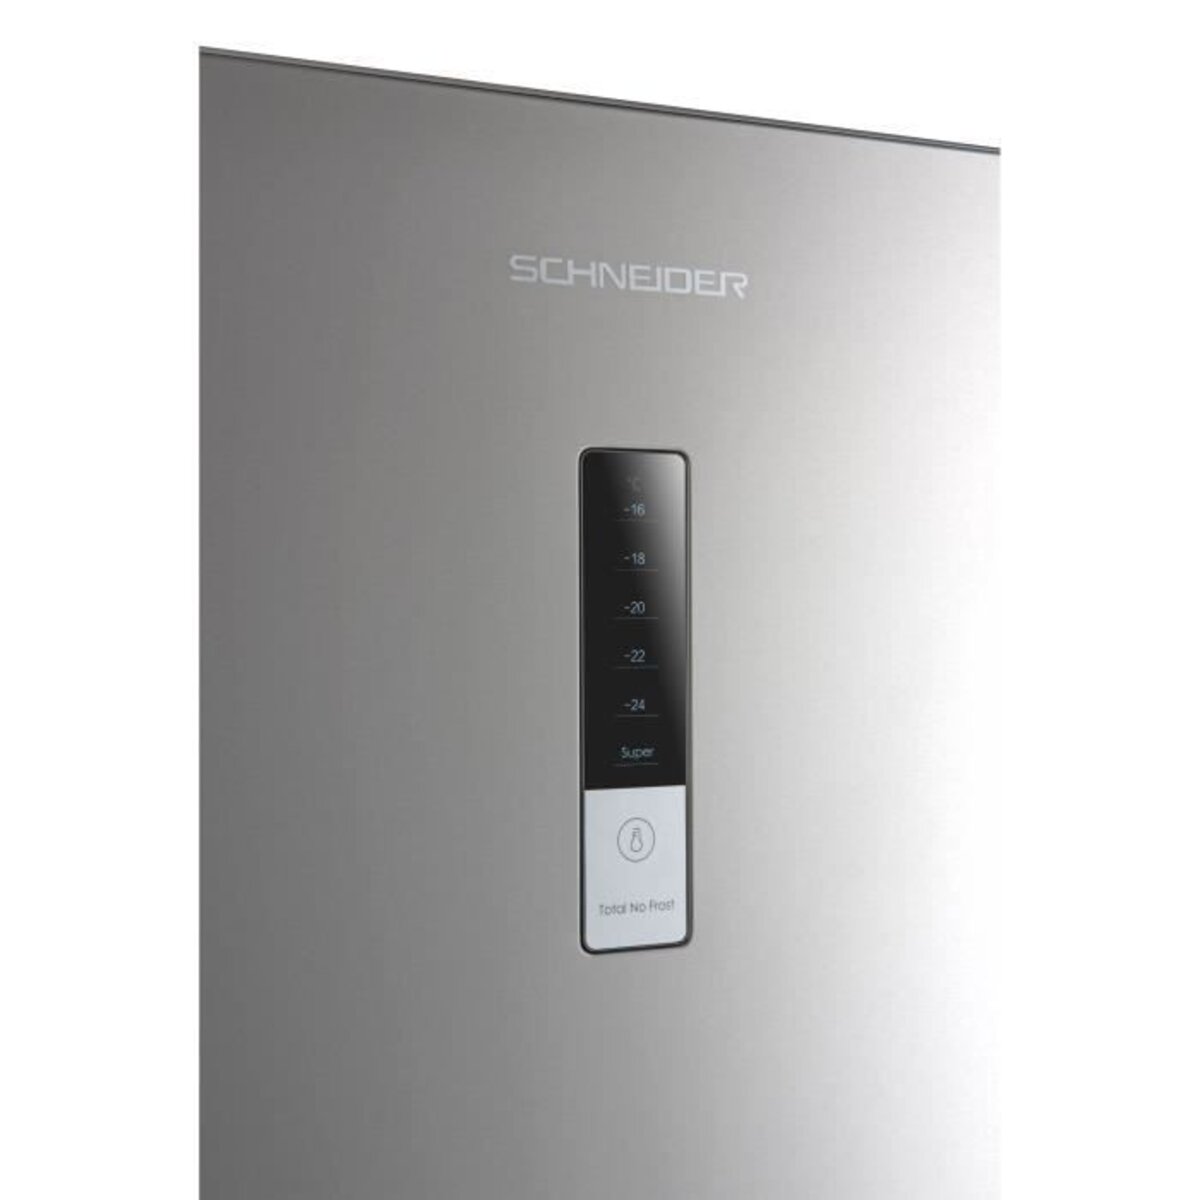 Schneider Congélateur vertical SCCV360NF